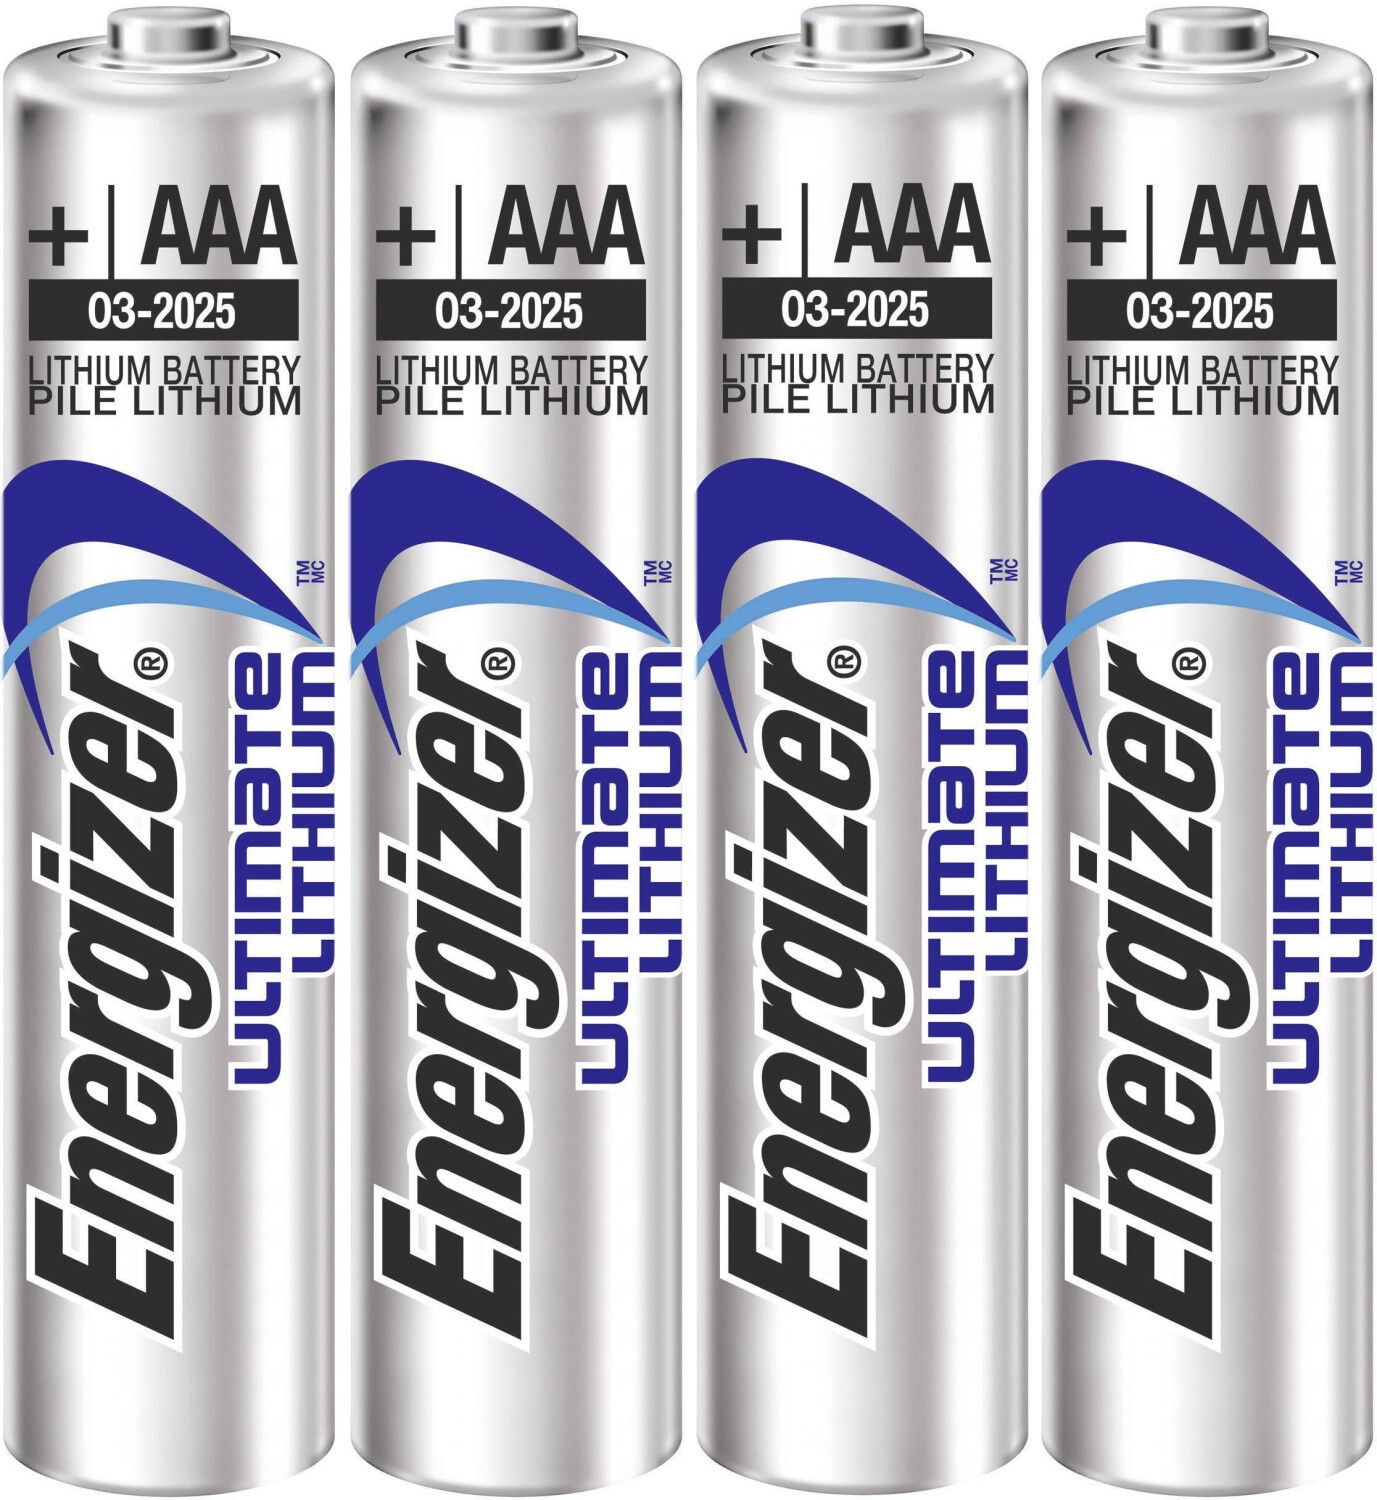 Energizer Ultimate FR03 Batteria Ministilo (AAA) Litio 1250 mAh